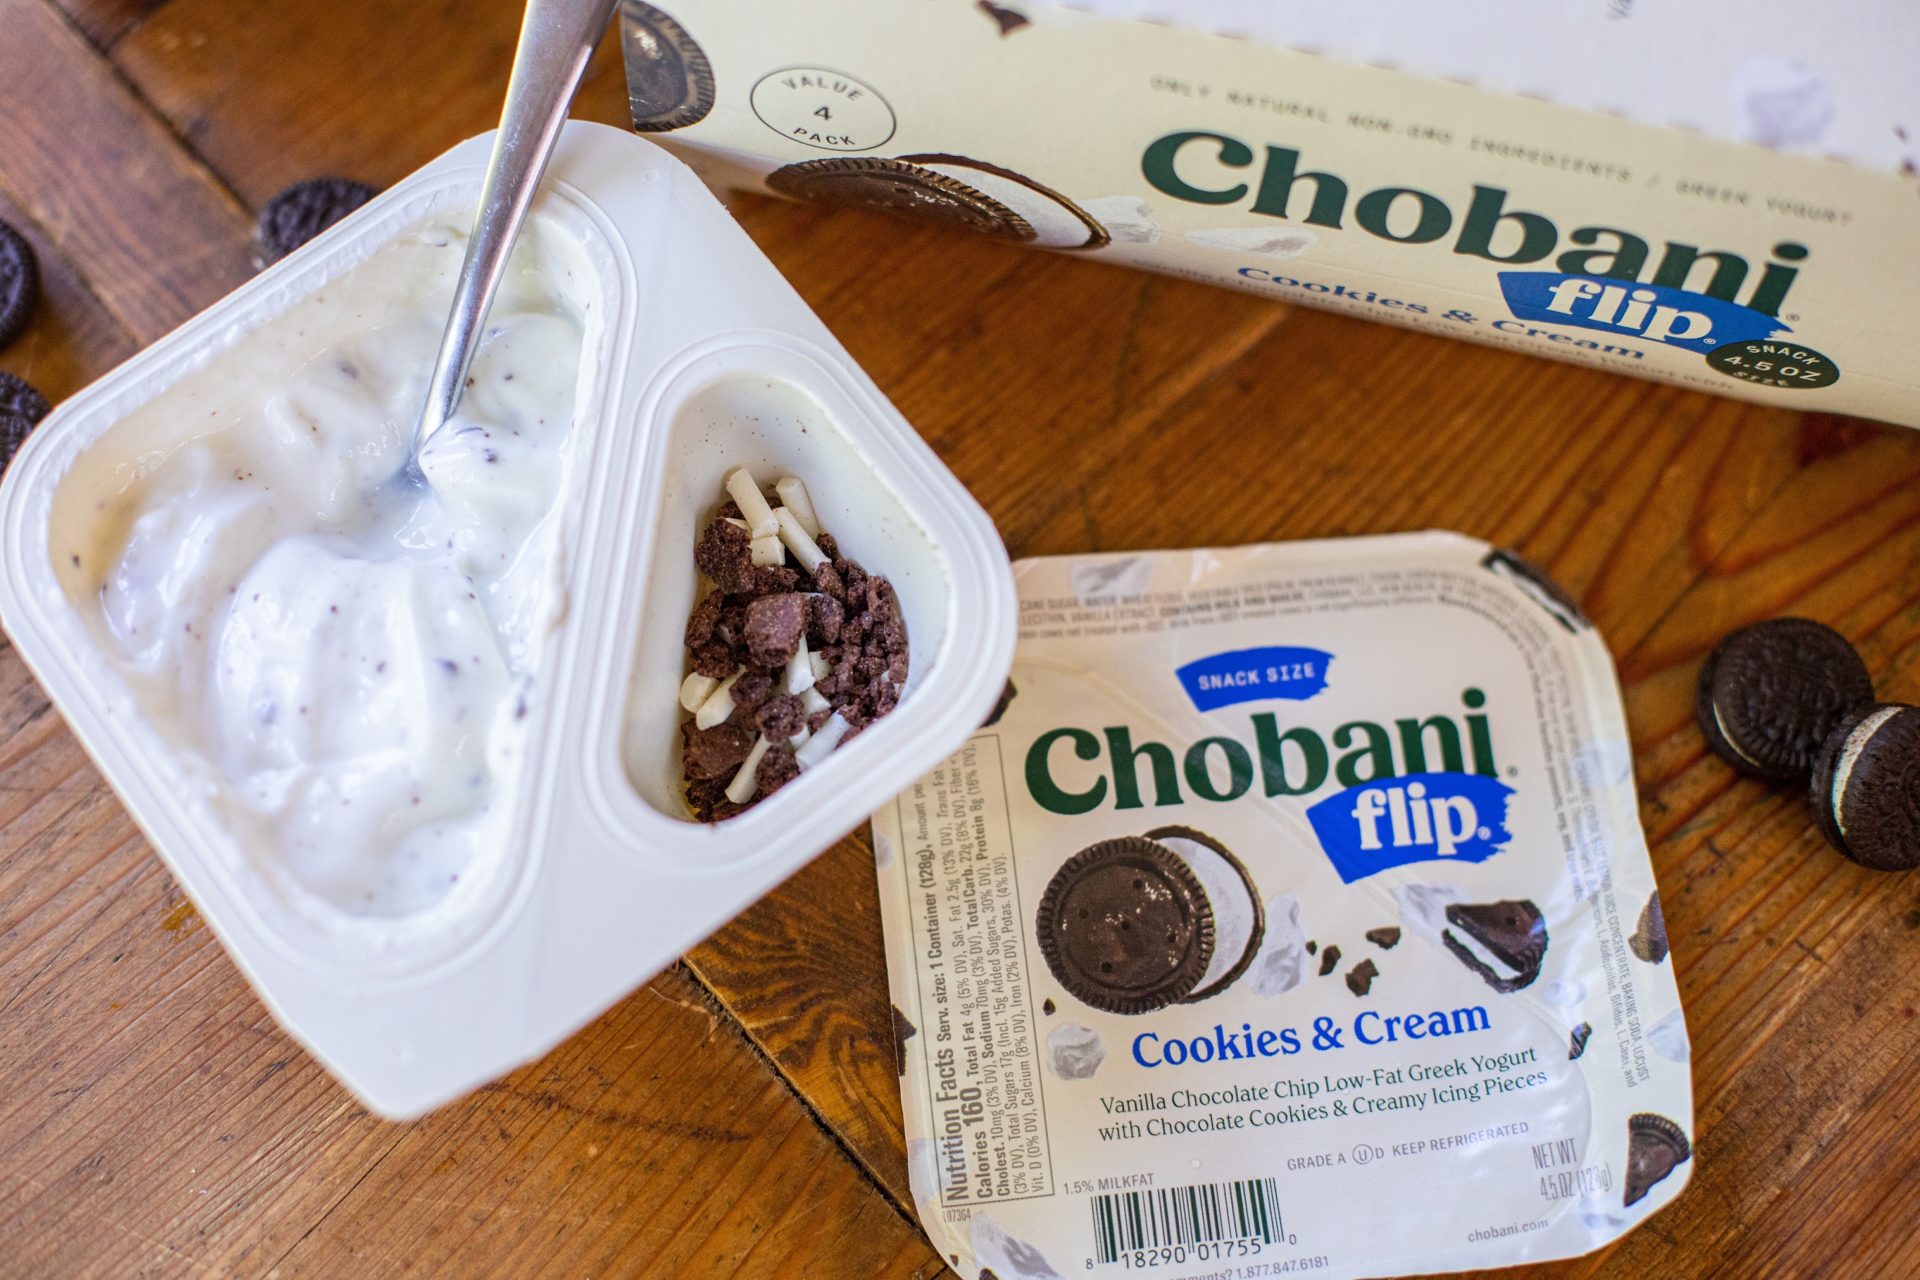 Chobani Flip Yogurt Just $1.21 At Kroger